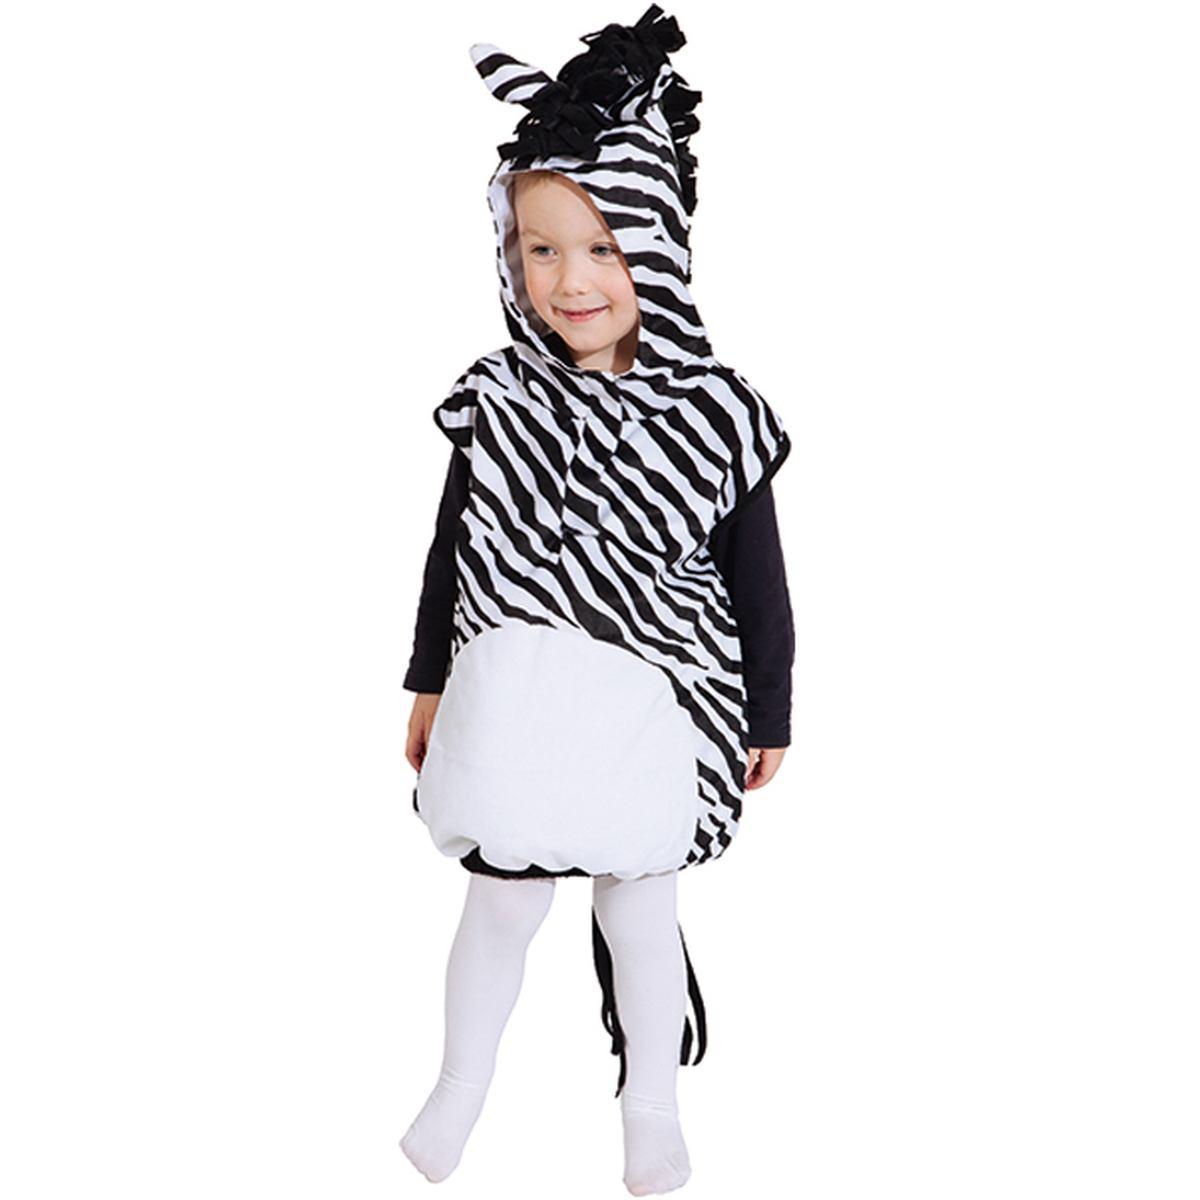 Costume Zebra Baby